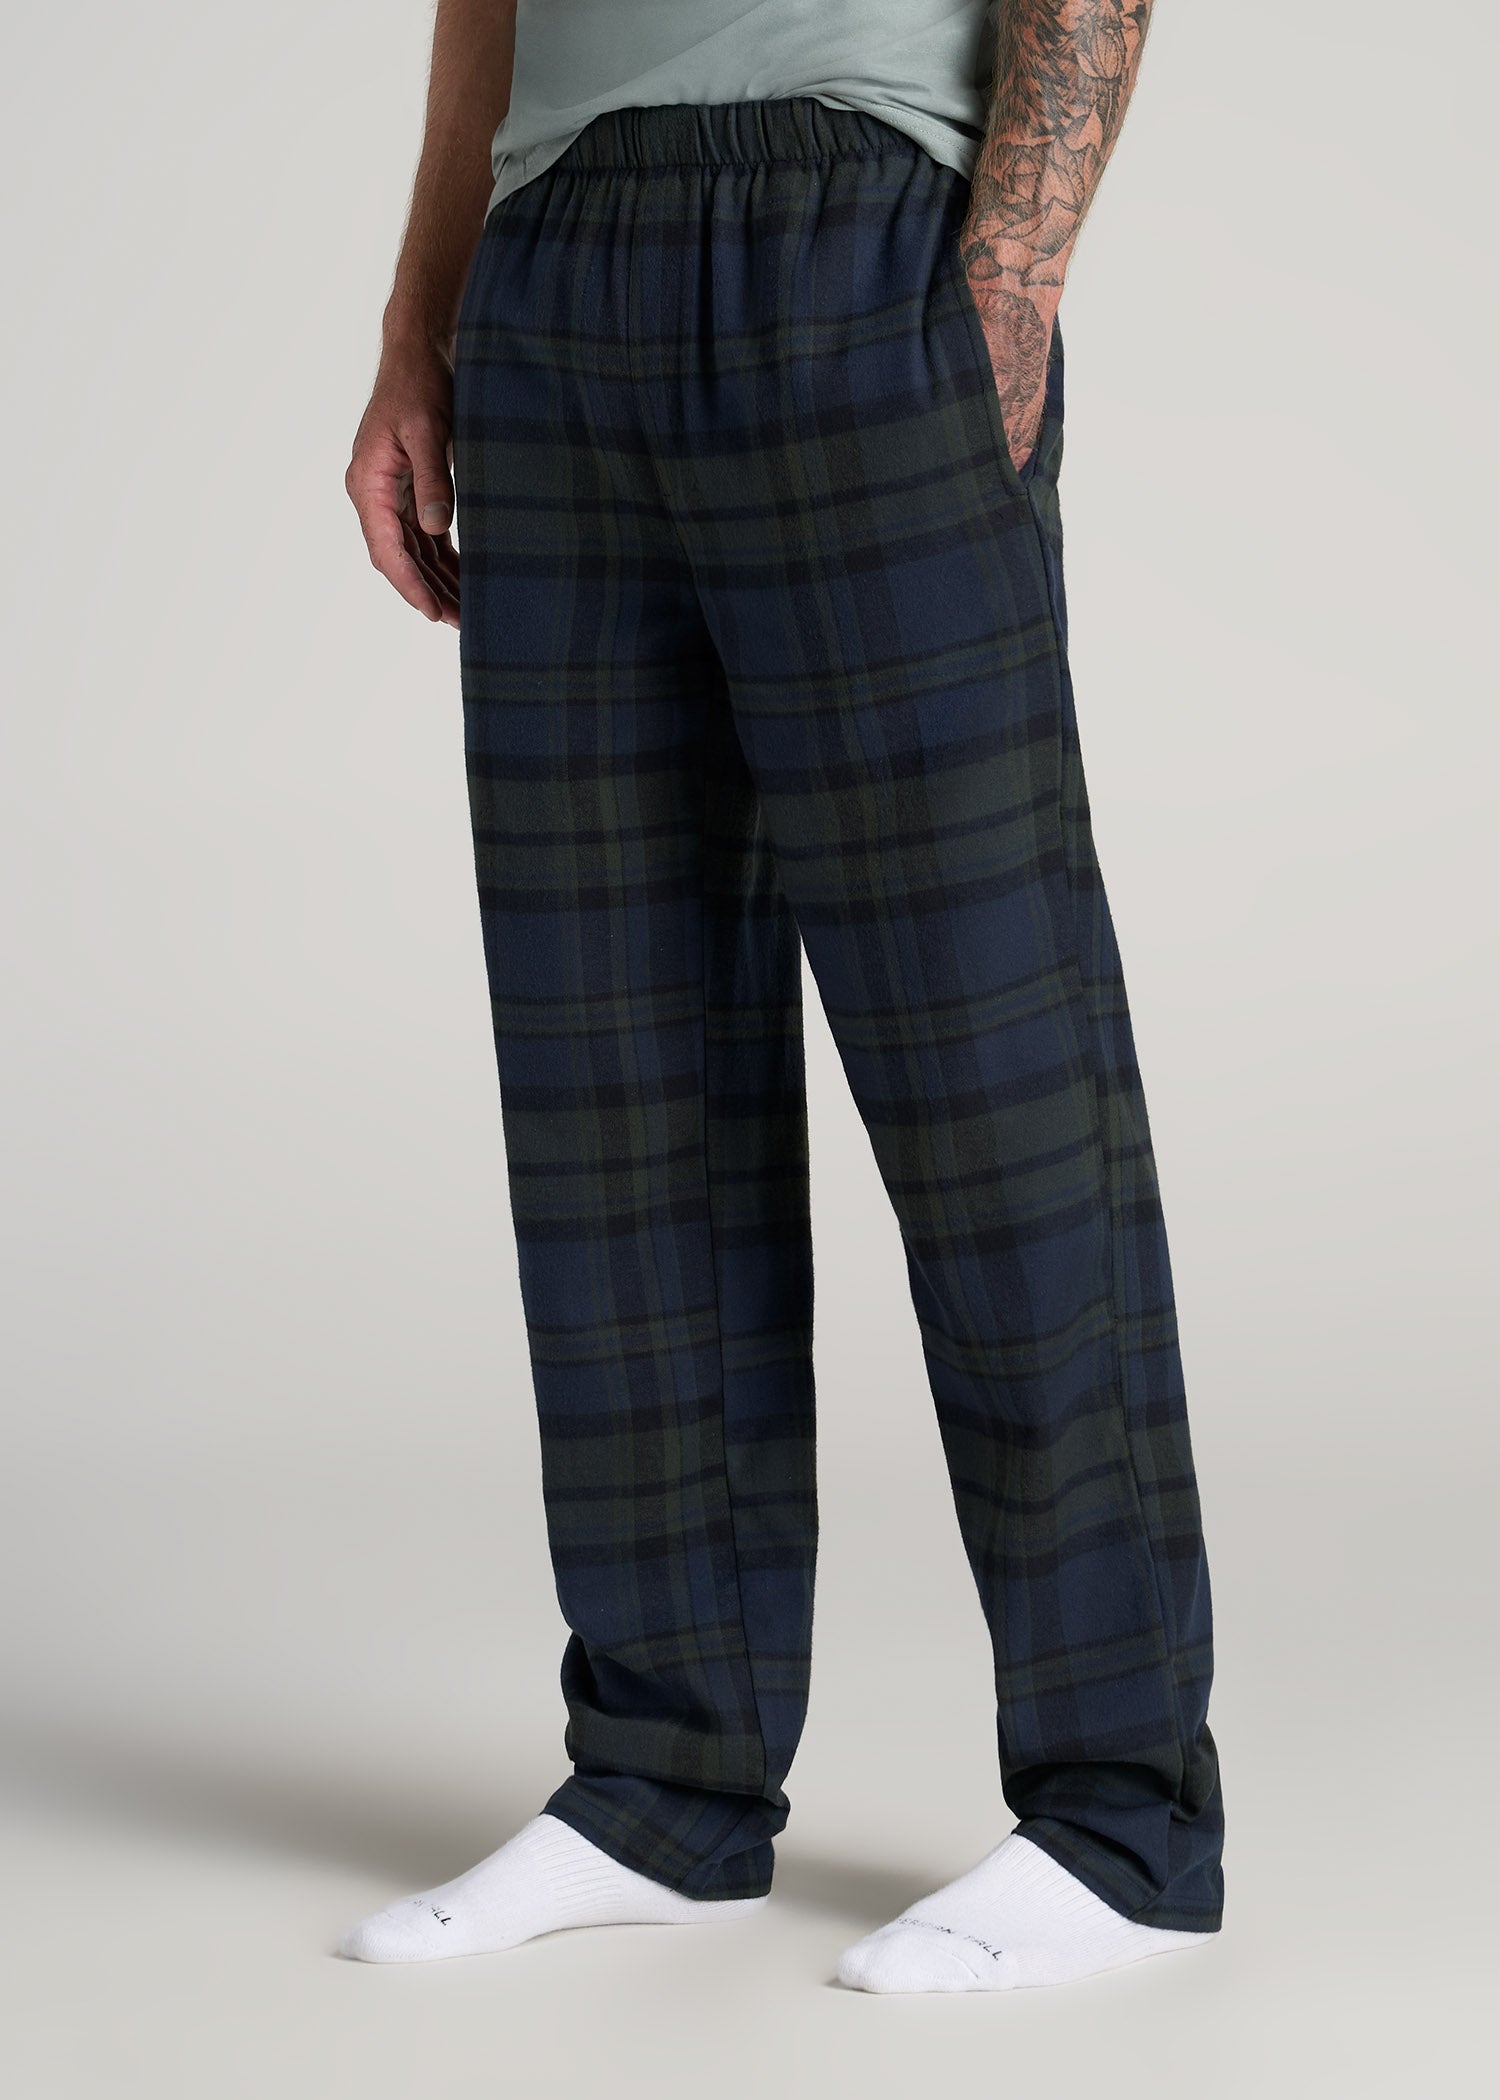 Concepts Sport Men's Boston Bruins Gauge Black Knit Pajama Pants | Dick's  Sporting Goods